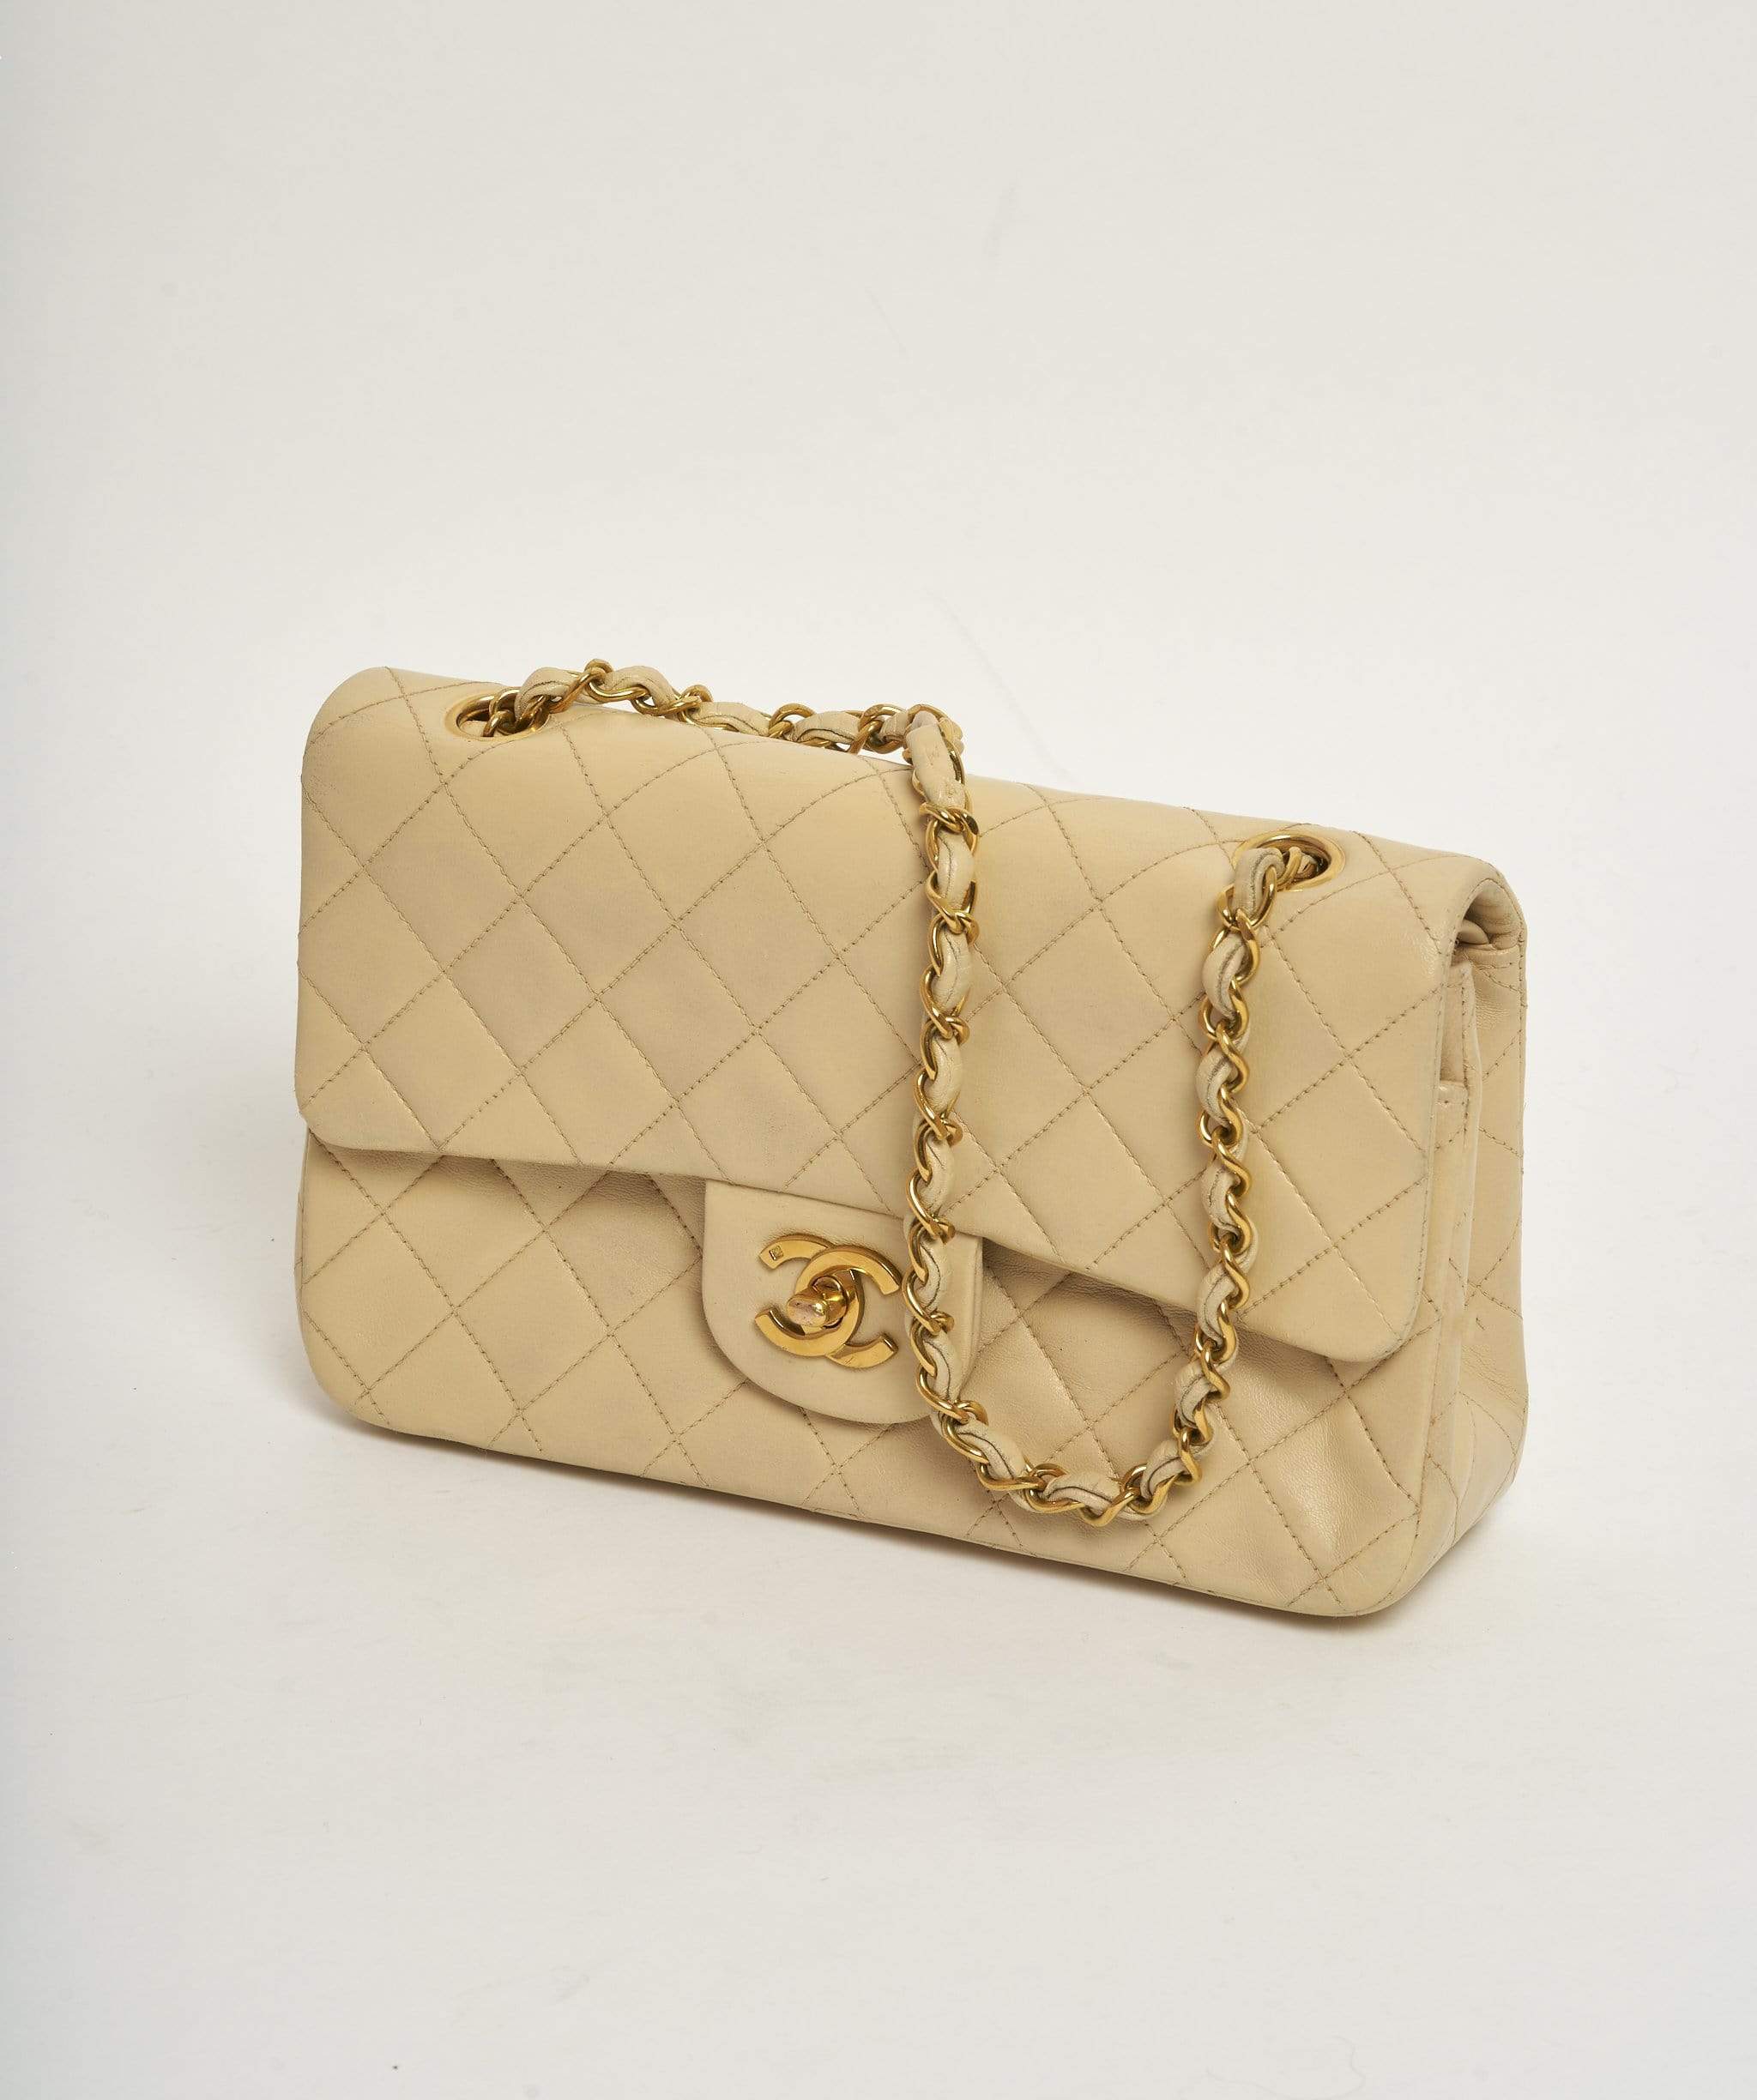 Chanel Chanel classic flap beige lambksin 9 inch